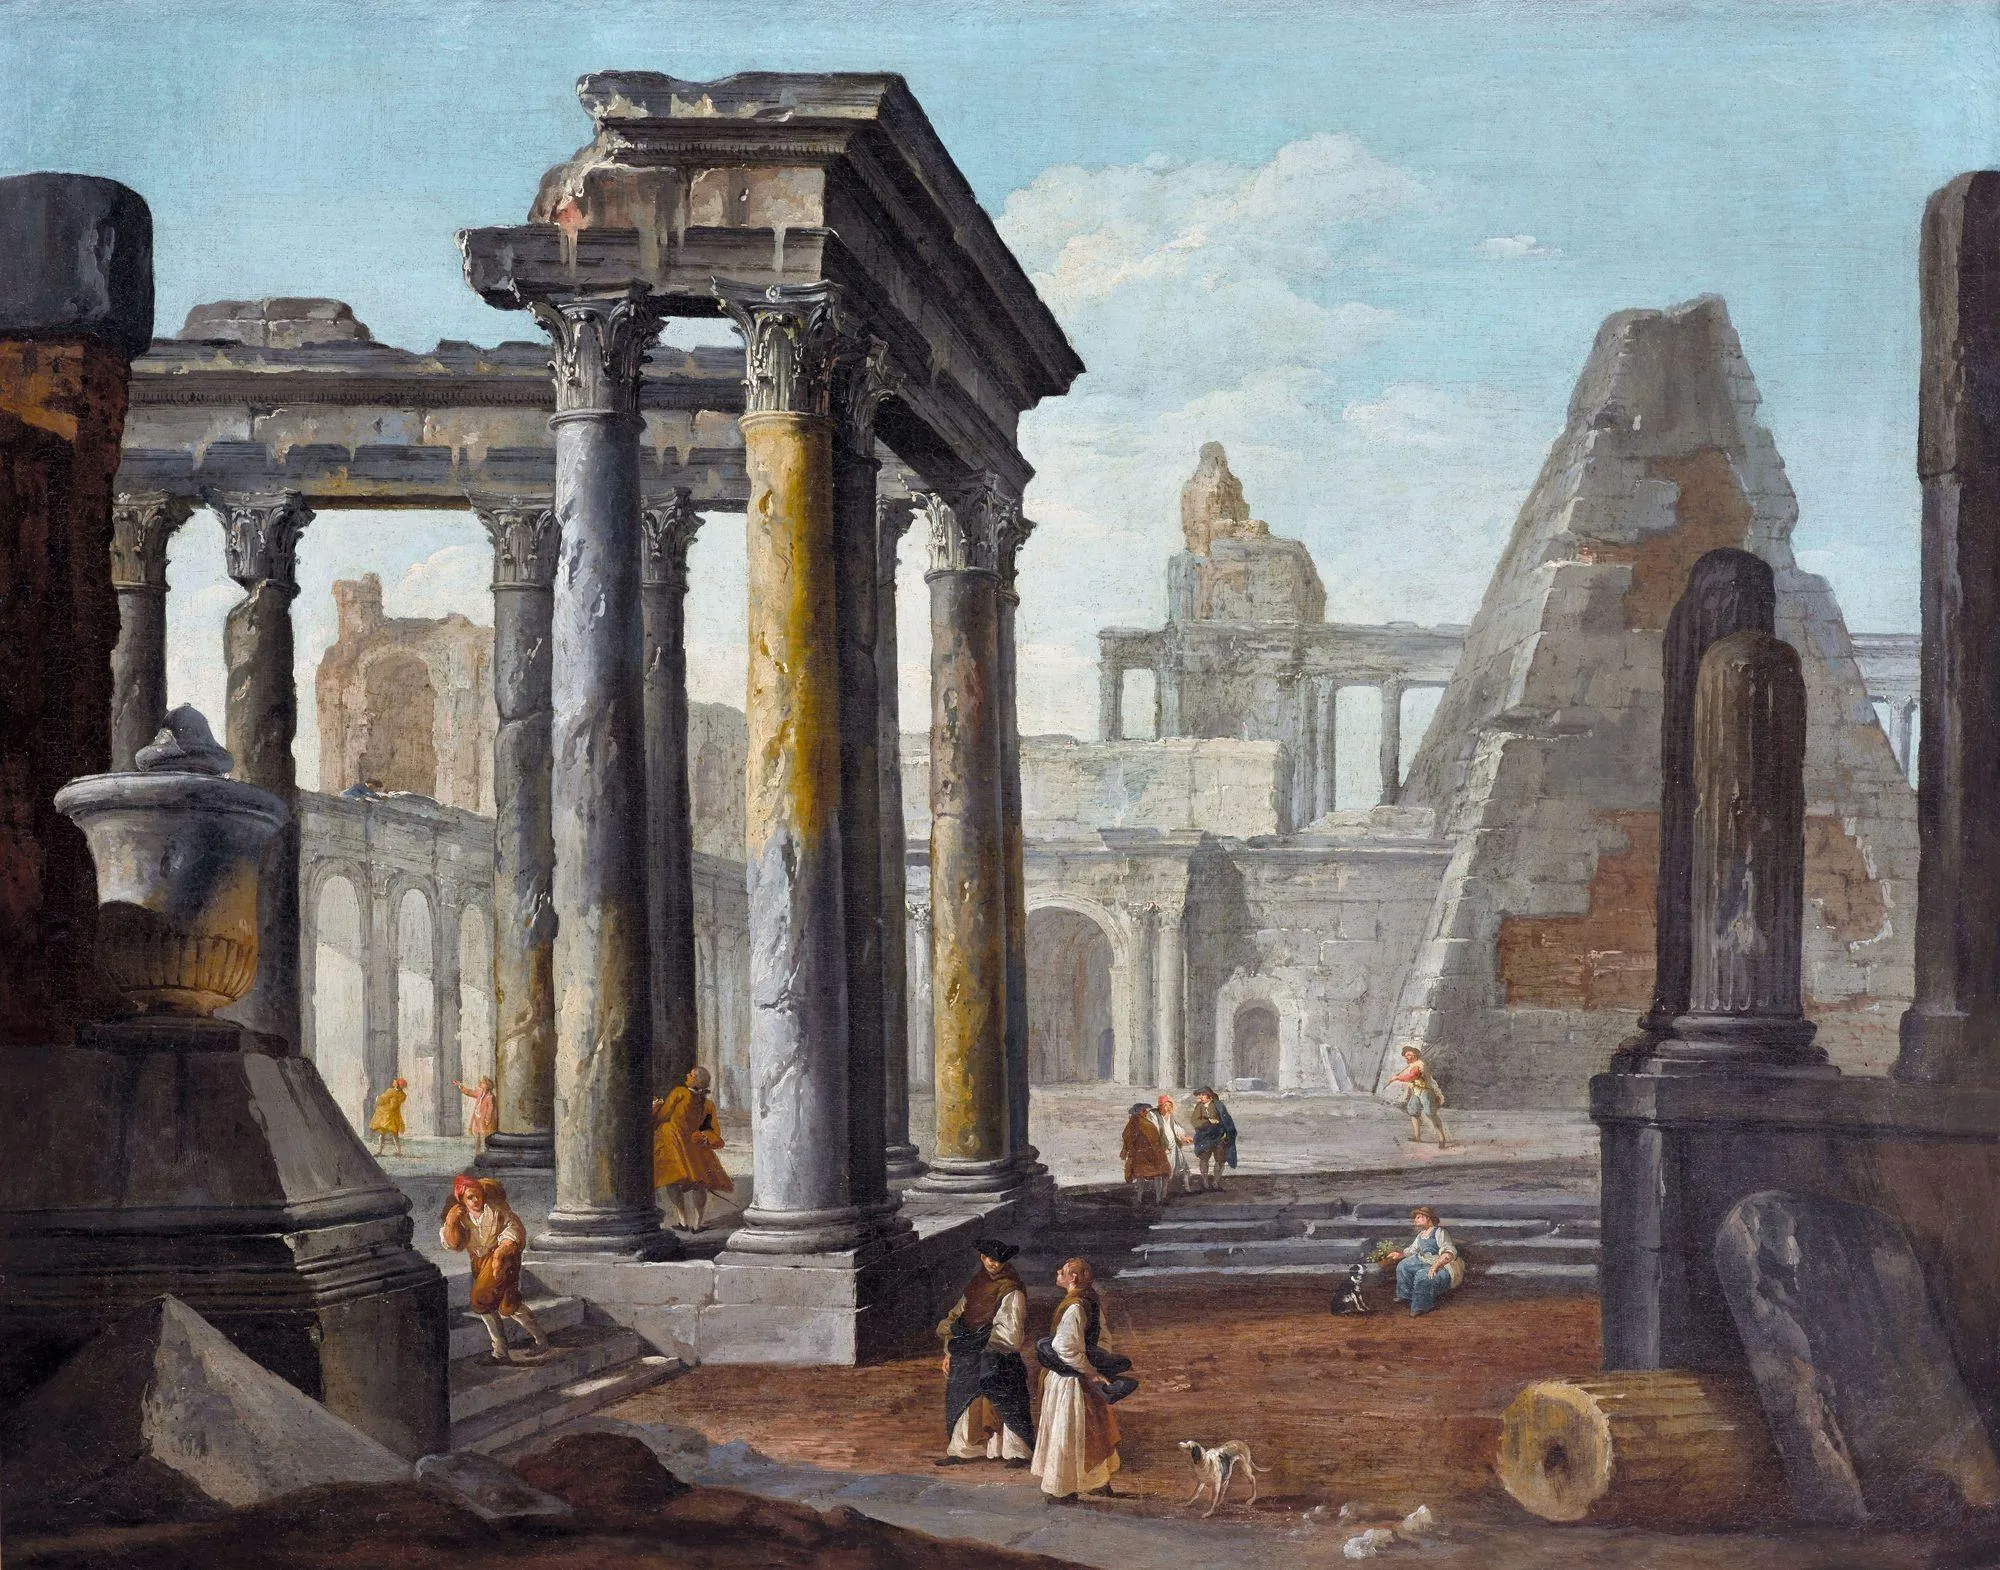 Robert Hubert, Caprice avec ruines romaines, XVIIIe siècle, huile sur toile, 100 x 127 cm, fondation Bemberg, Toulouse.